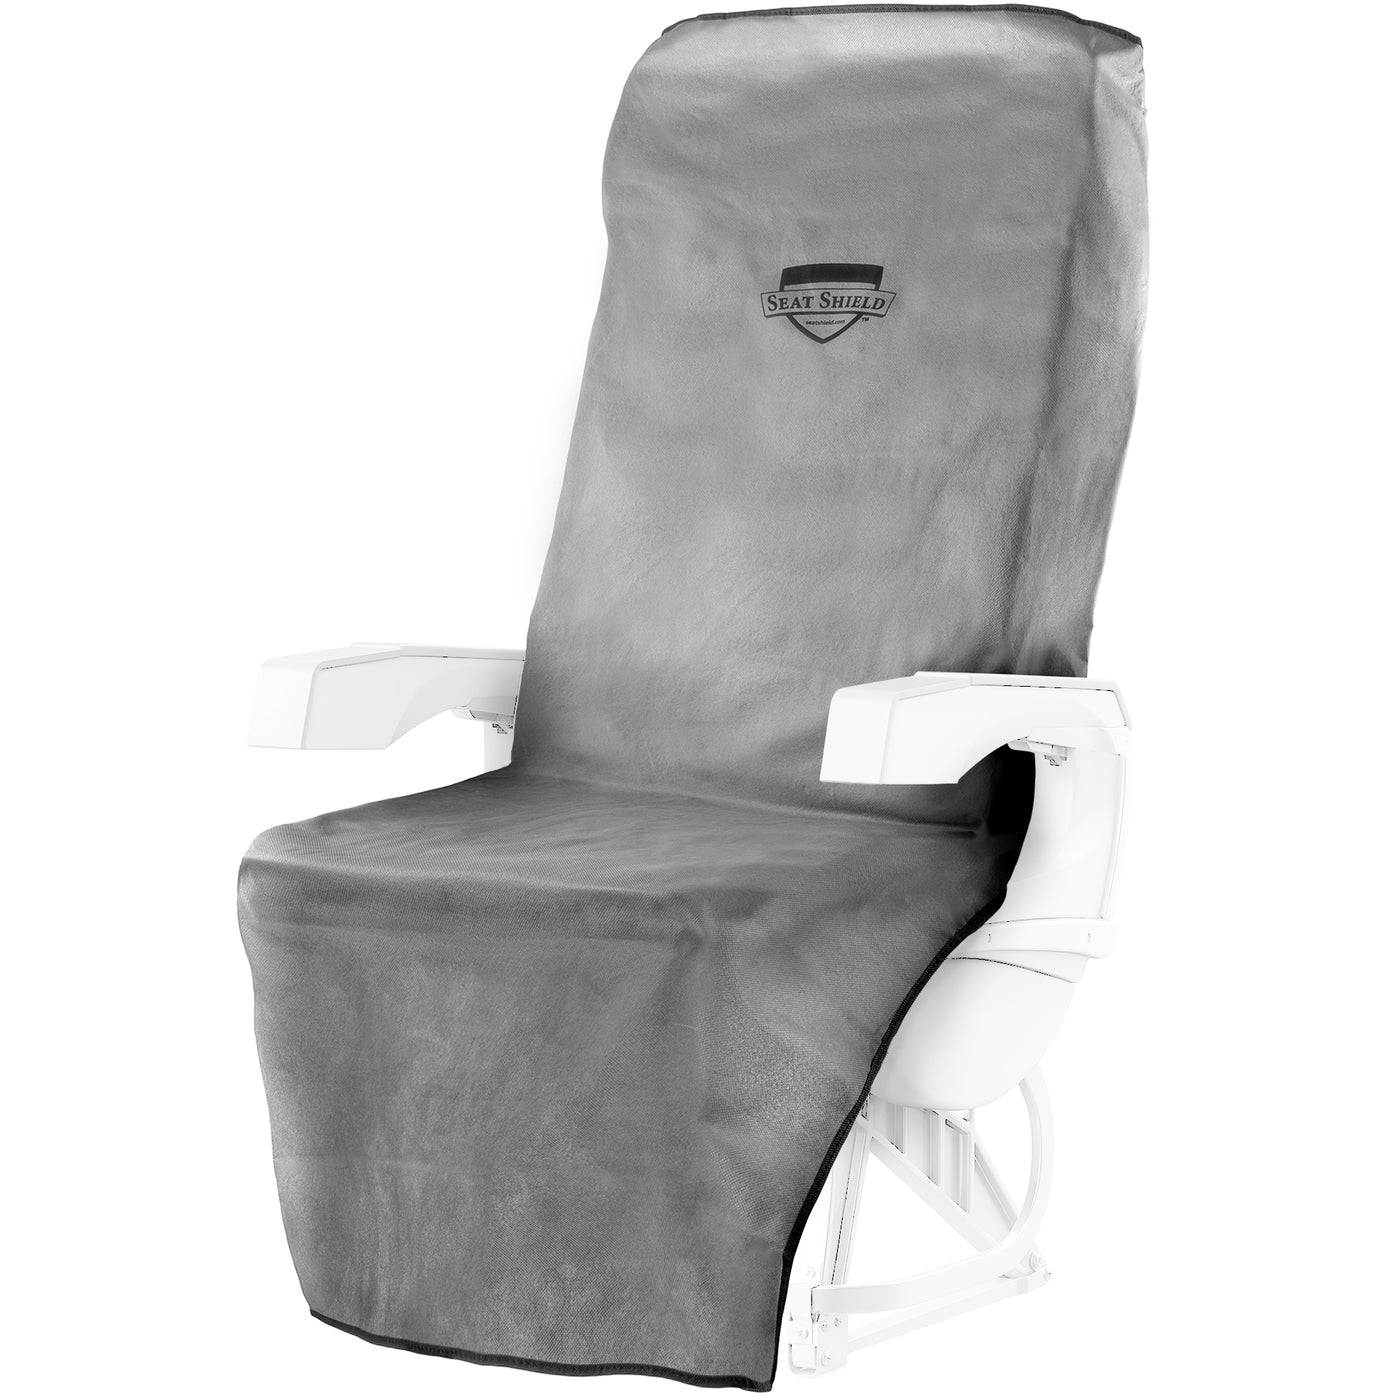 SeatShield Airplane Seat Cover - Gray